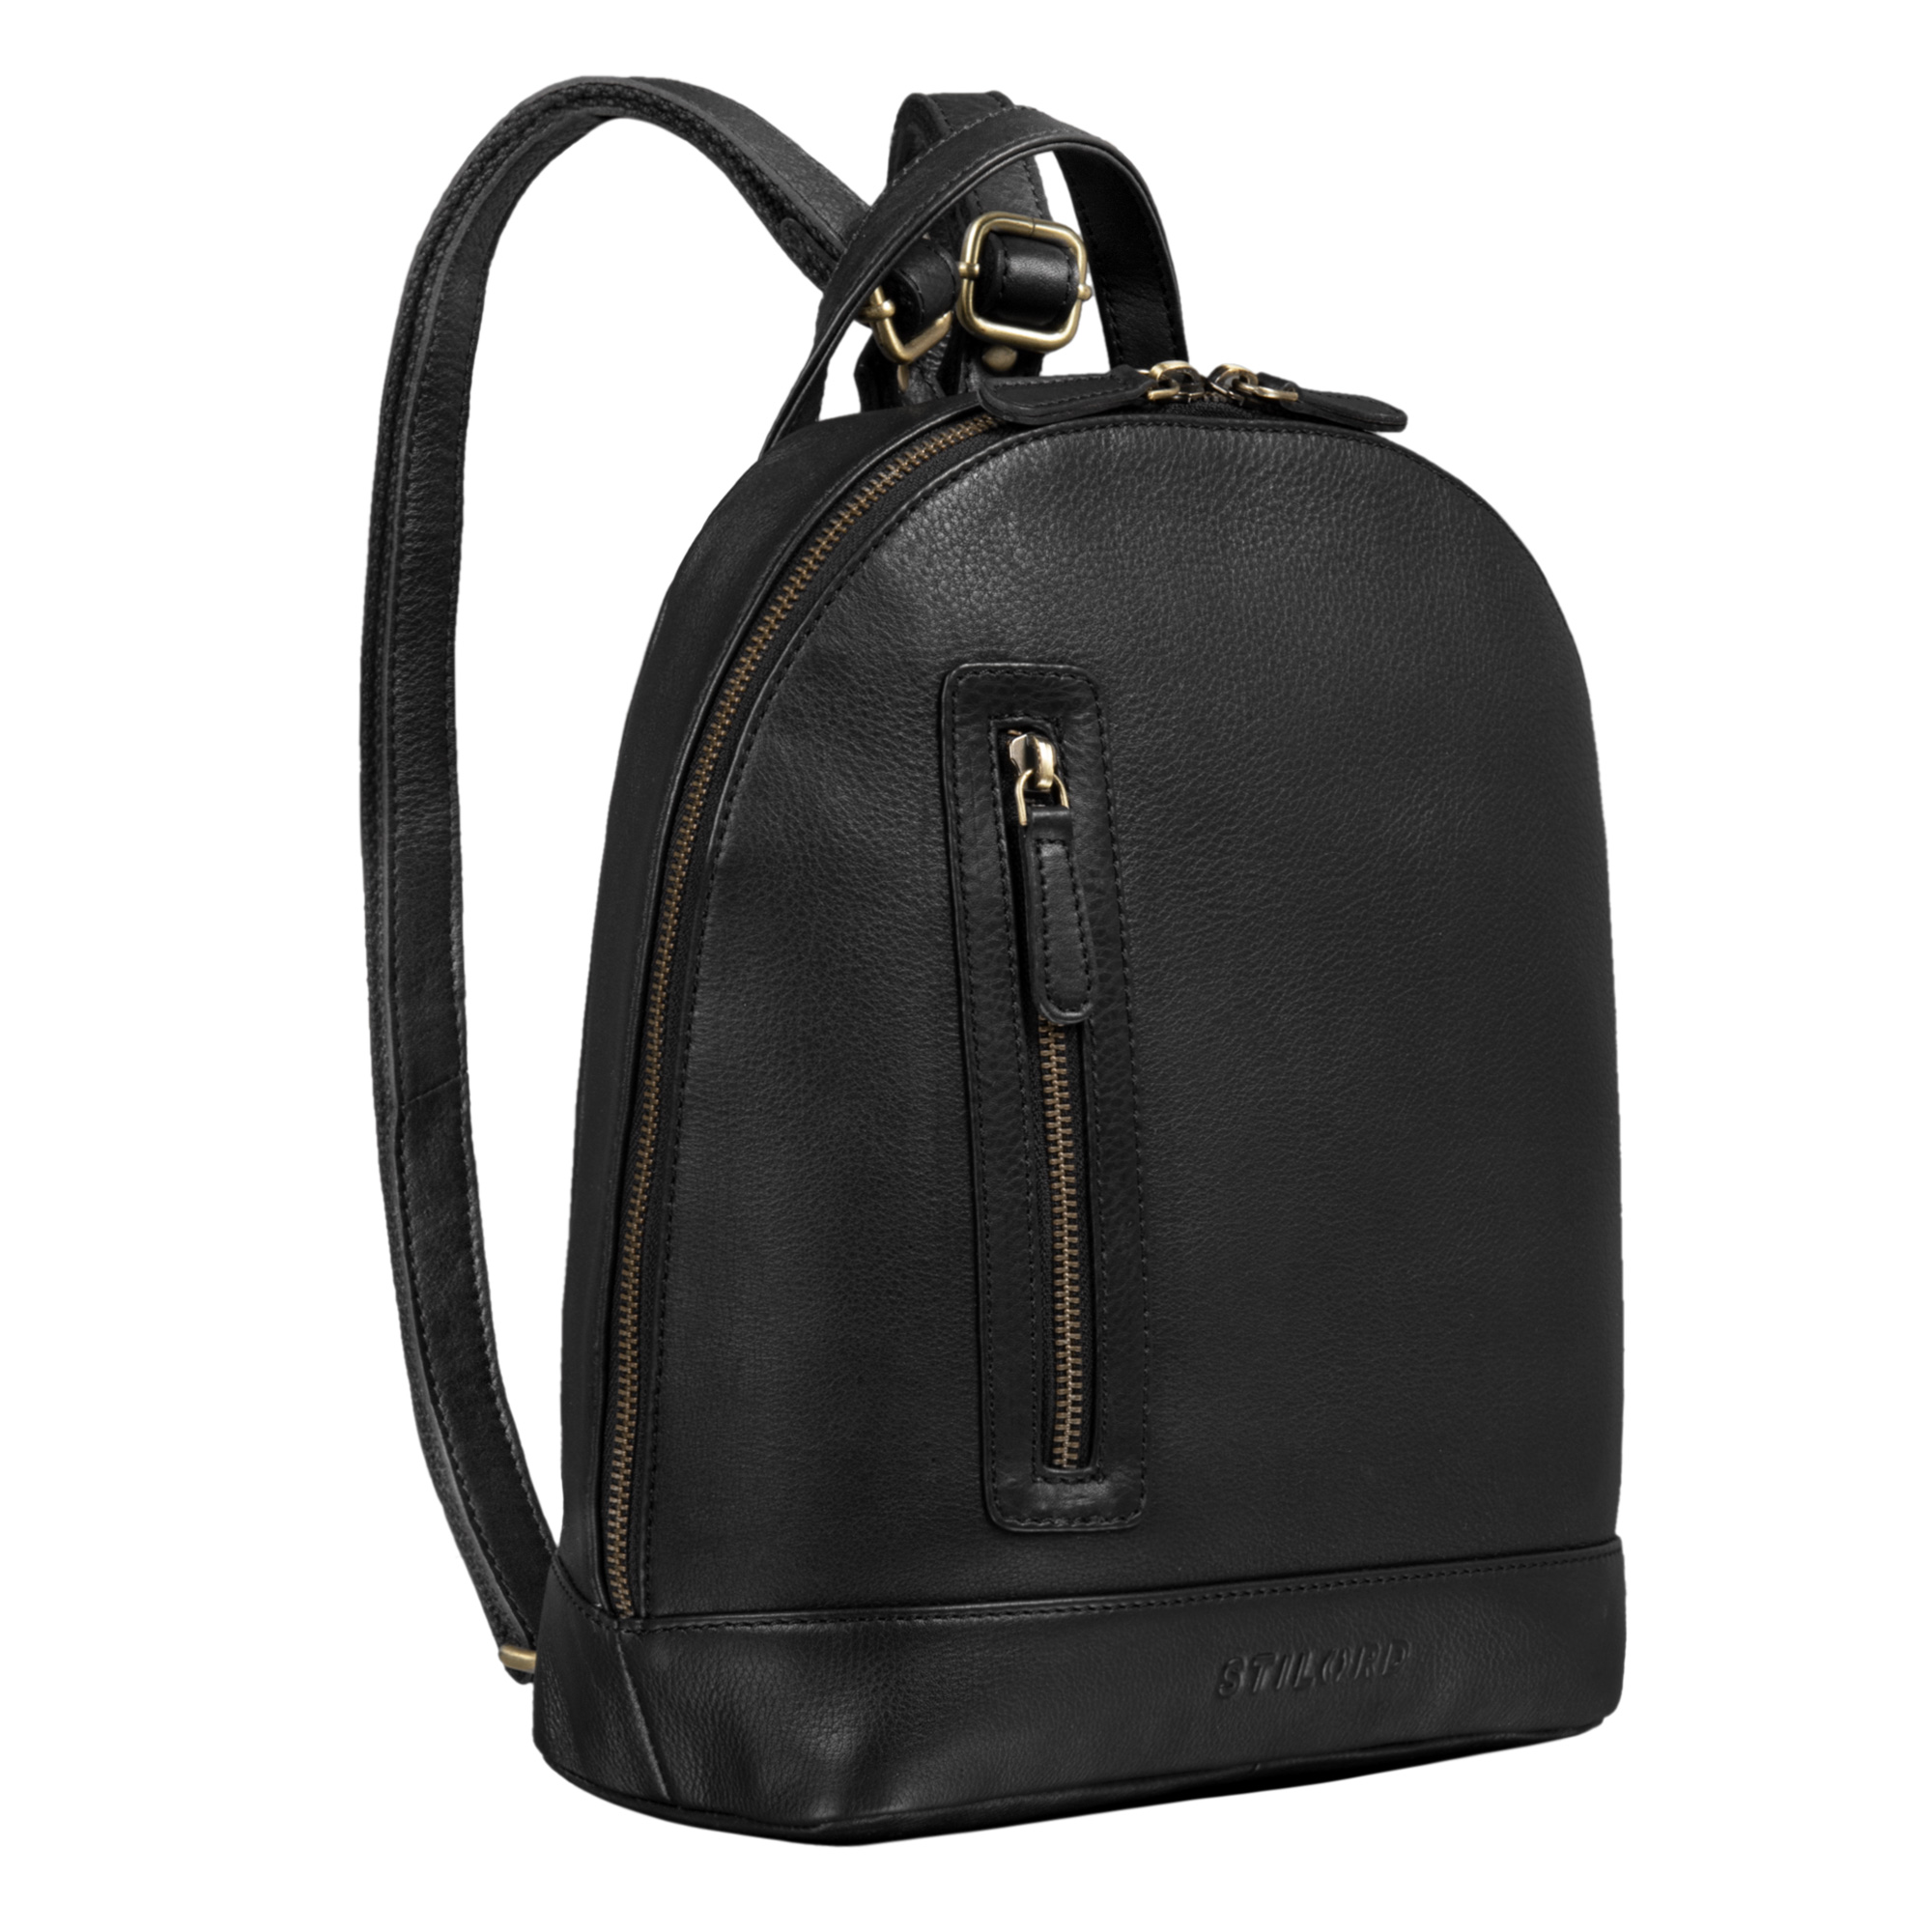 Amanda Black Convertible Backpack Purse | Small backpack purse, Backpack  purse, Stylish backpacks